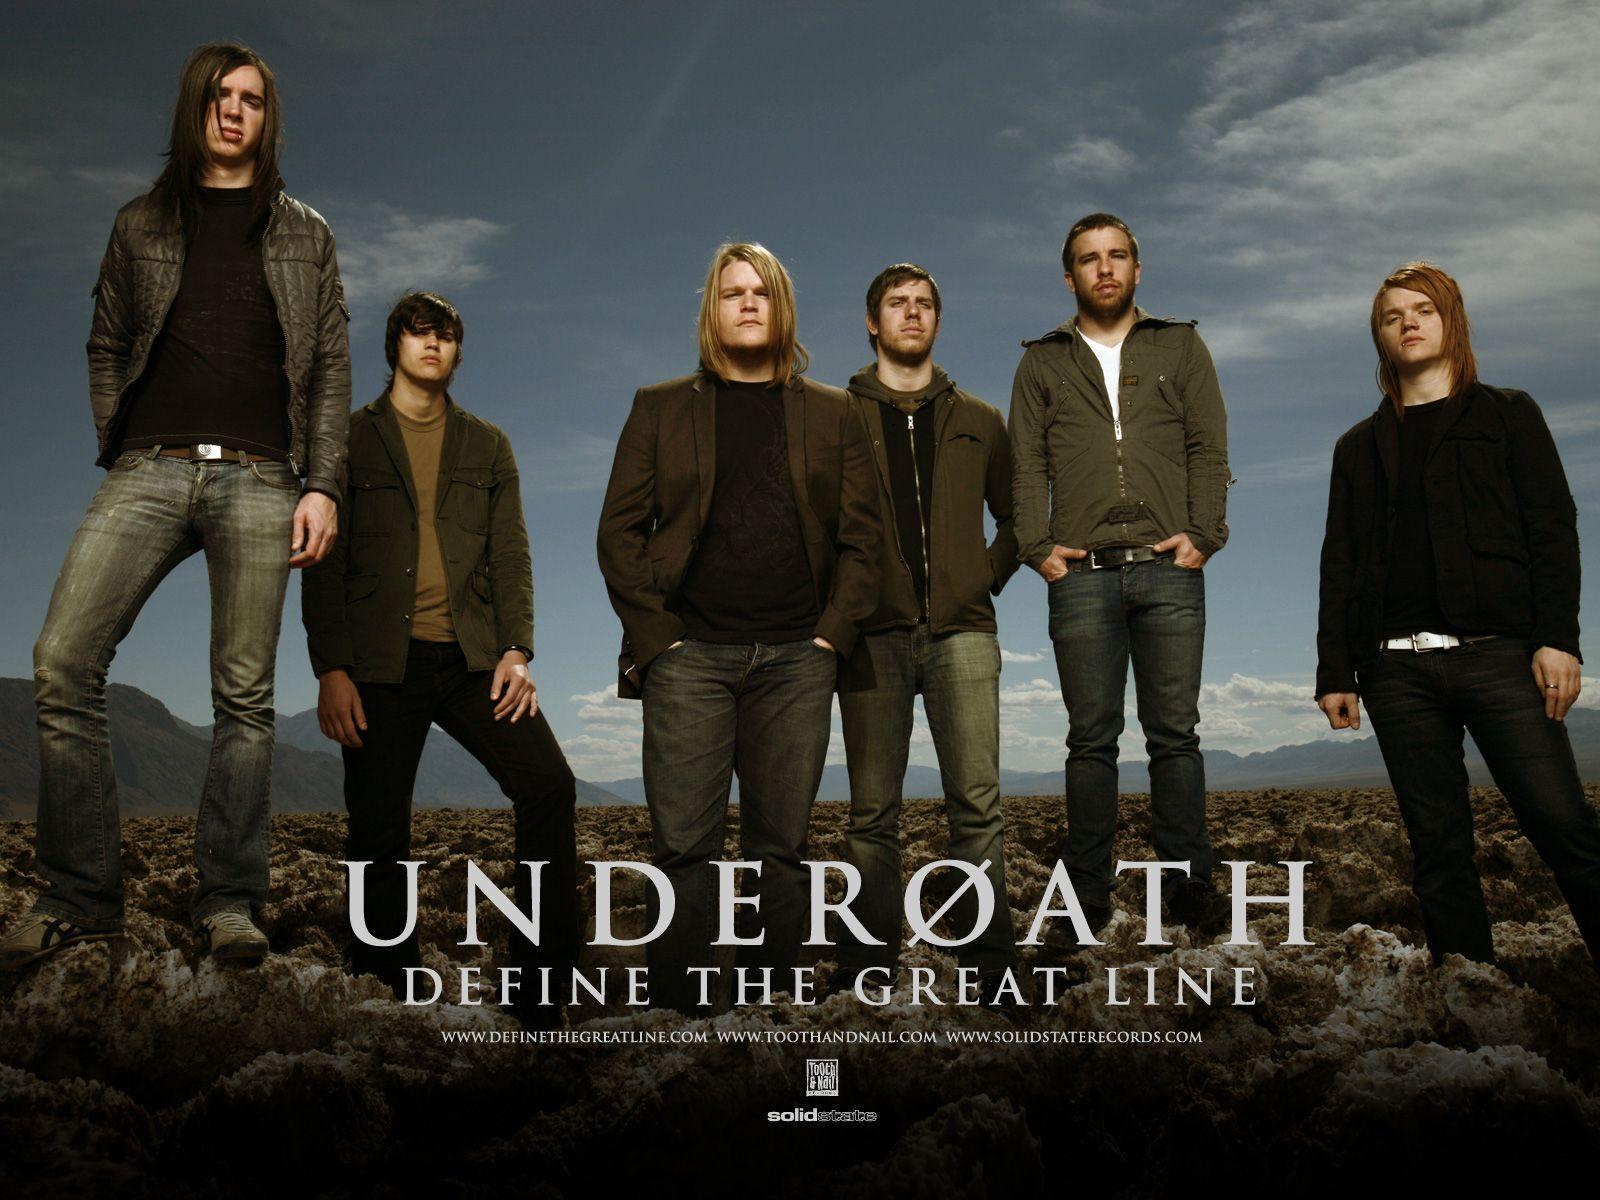 Underoath. band promos. Music bands, Music, Band